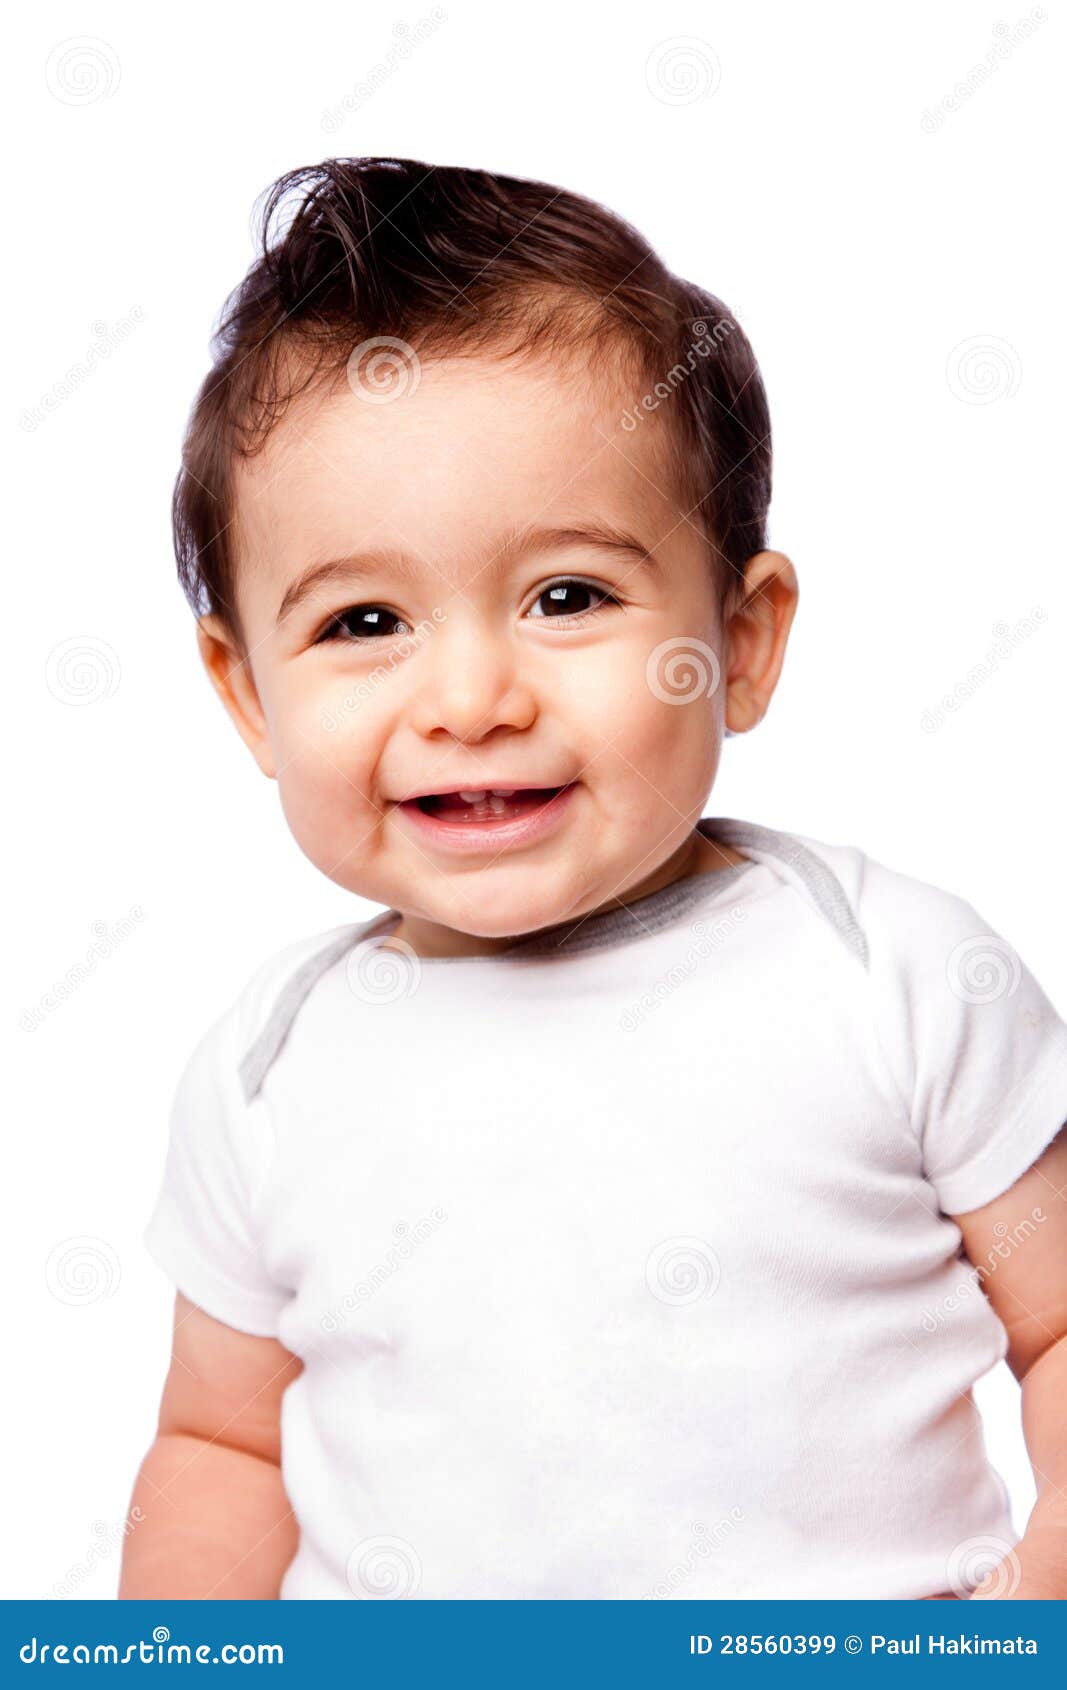 happy baby toddler smiling